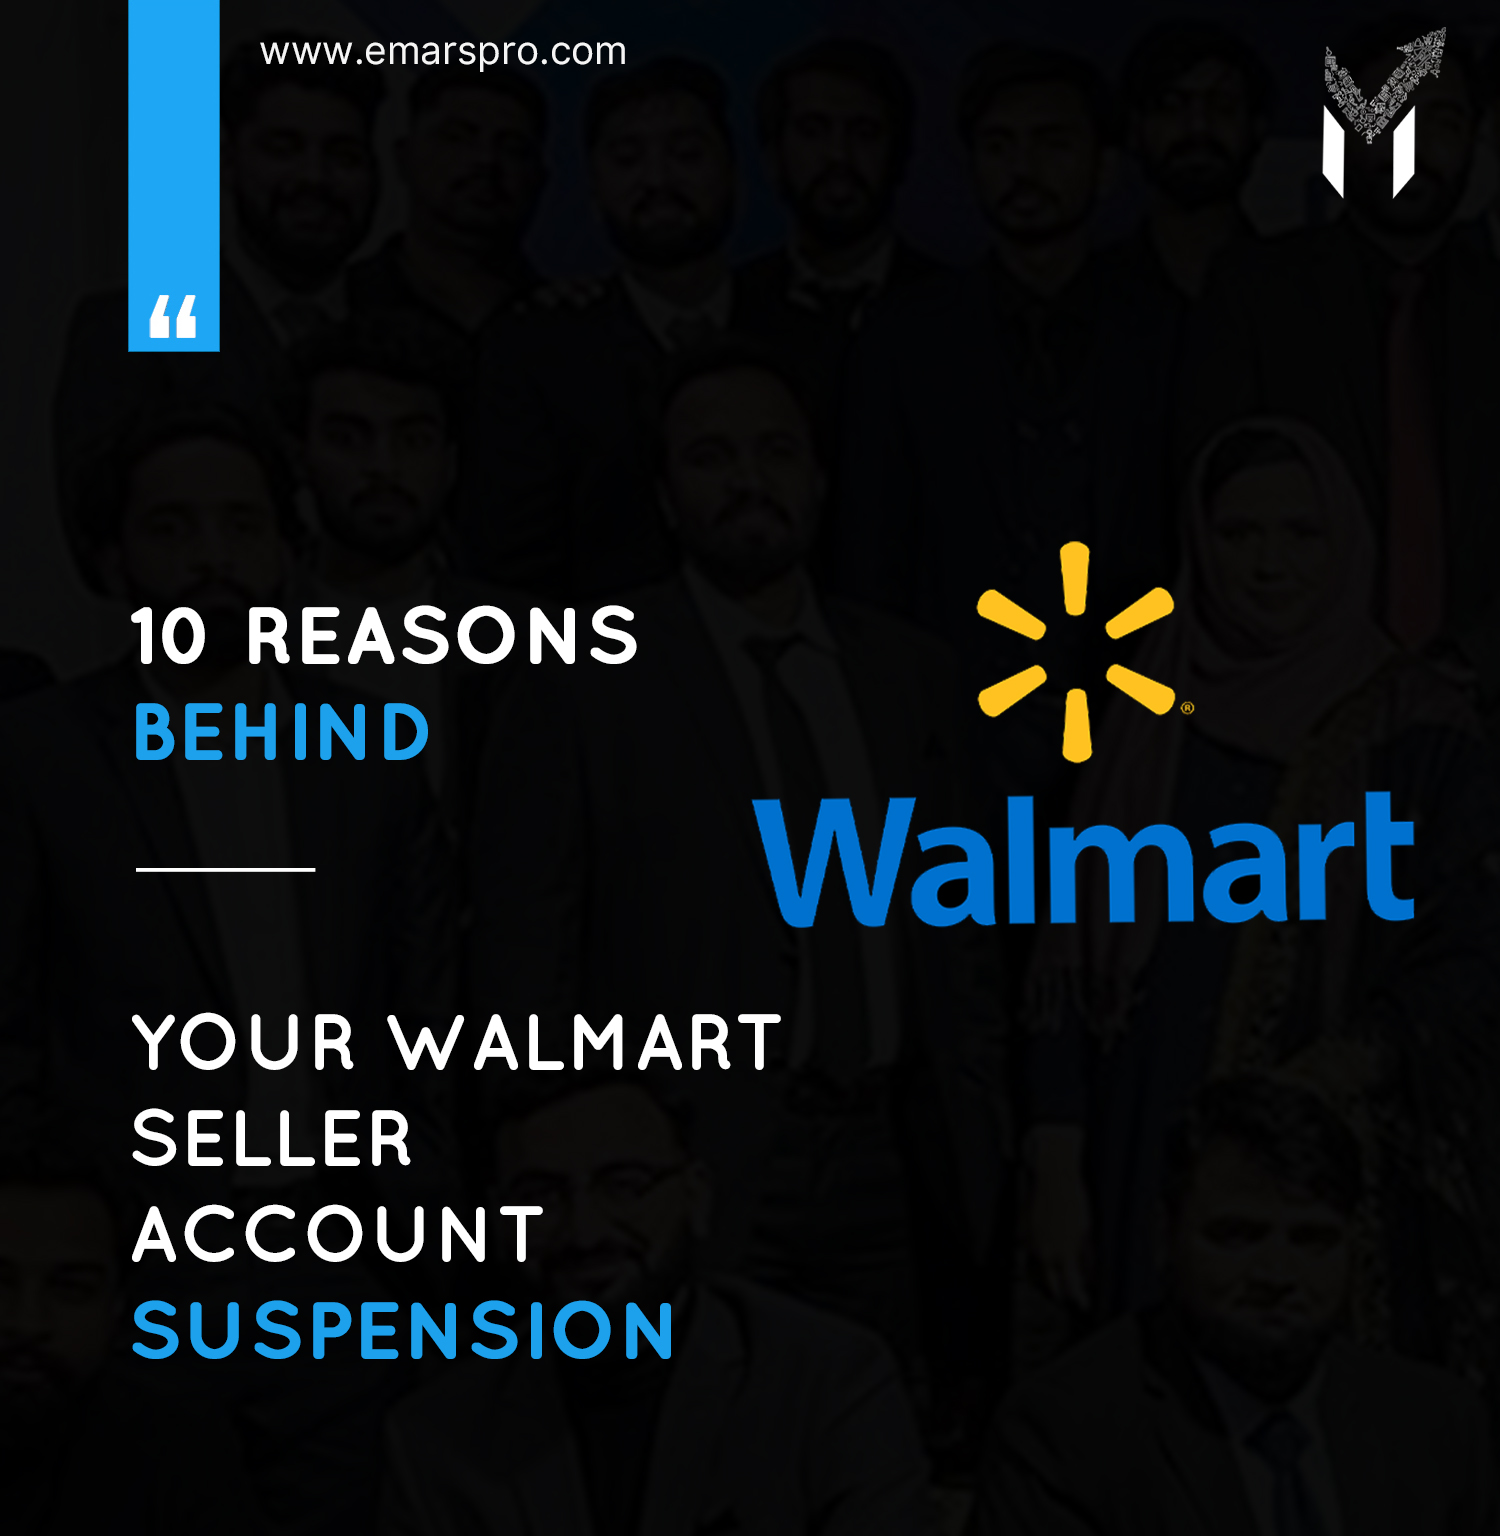 10 Reasons behind your Walmart Seller Account Suspension